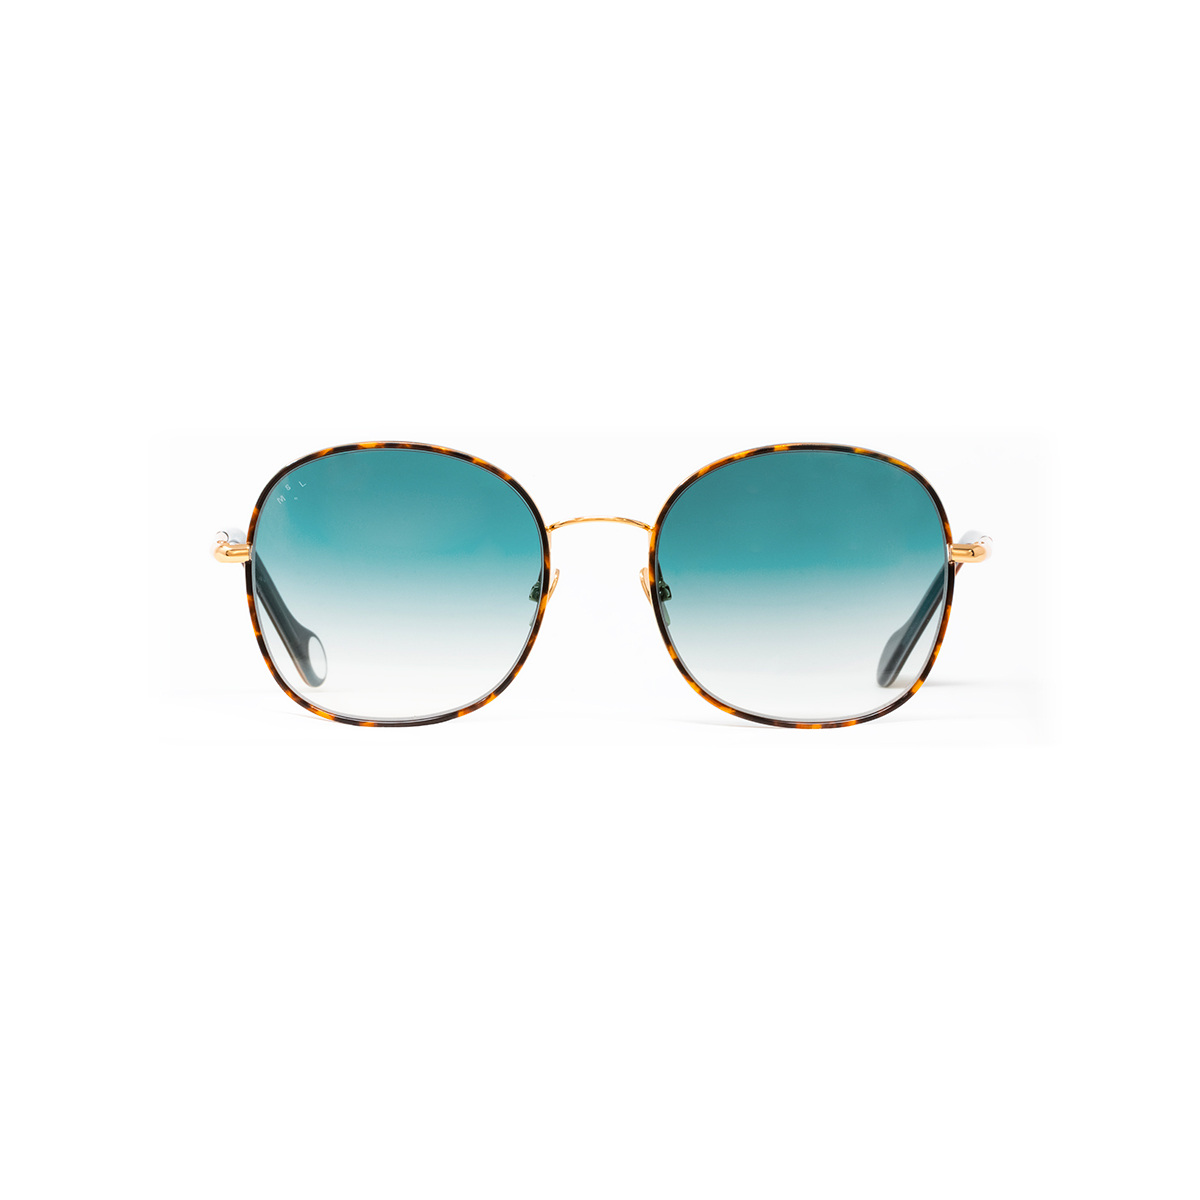 Sunglasses Diana, Blue gradient - Size 53-20 - Steel - image 1